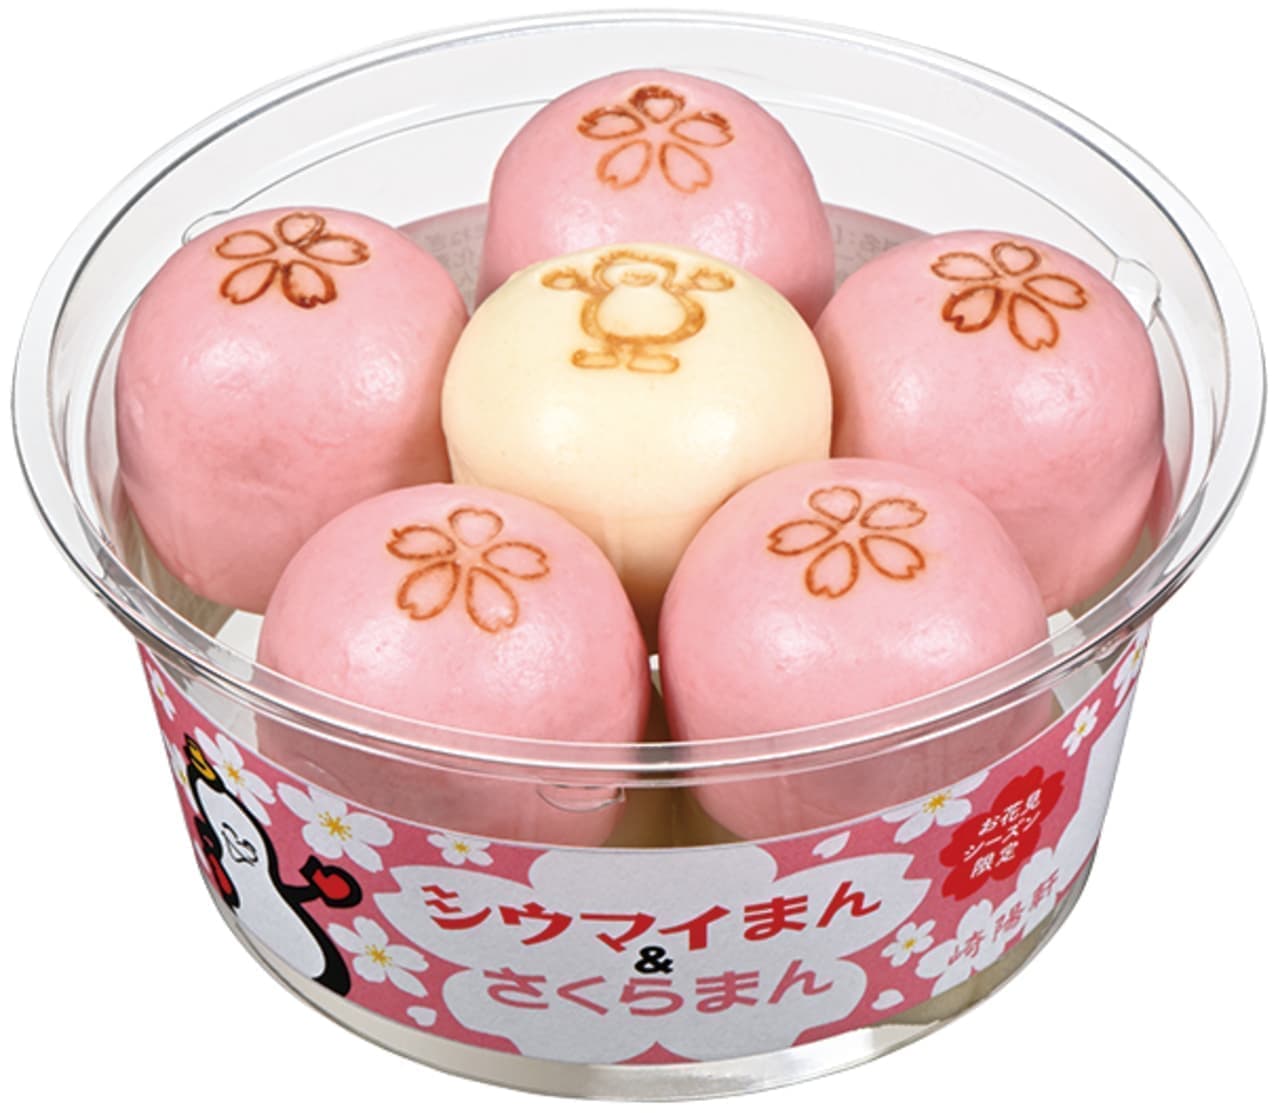 Sakiyo-ken "Cherry Blossom Viewing Season Limited Shiomai Man & Sakura Man", room temperature